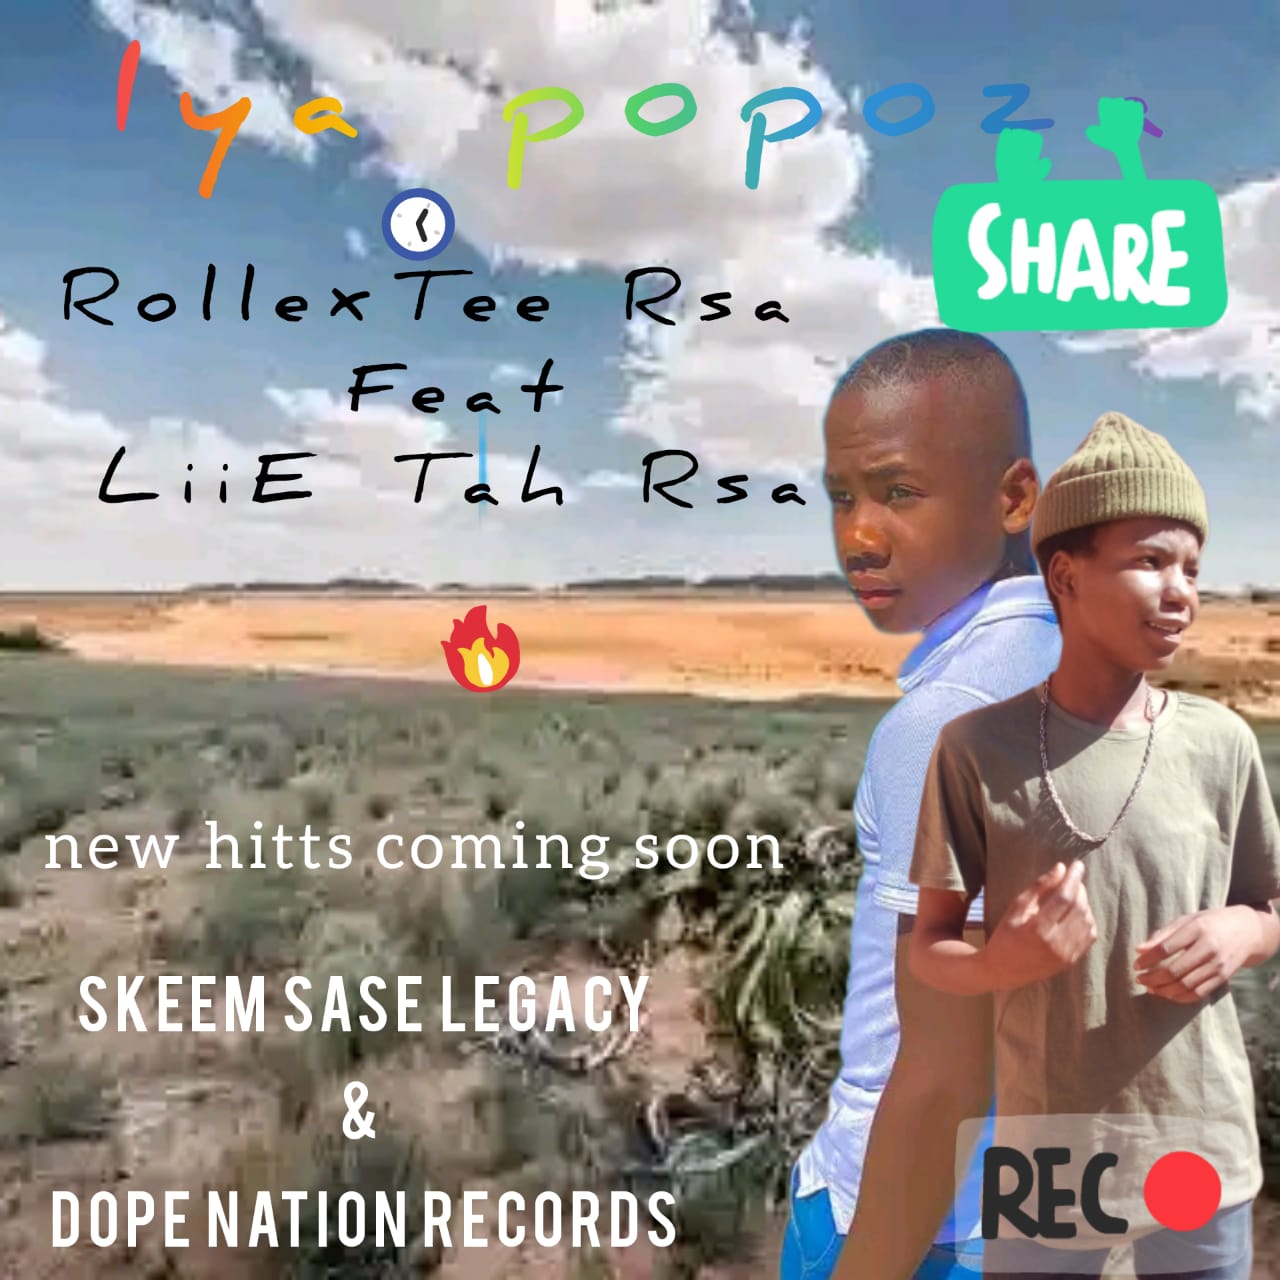 Drip iyapopoza - Lie Tah rsa ft Rollex Tee